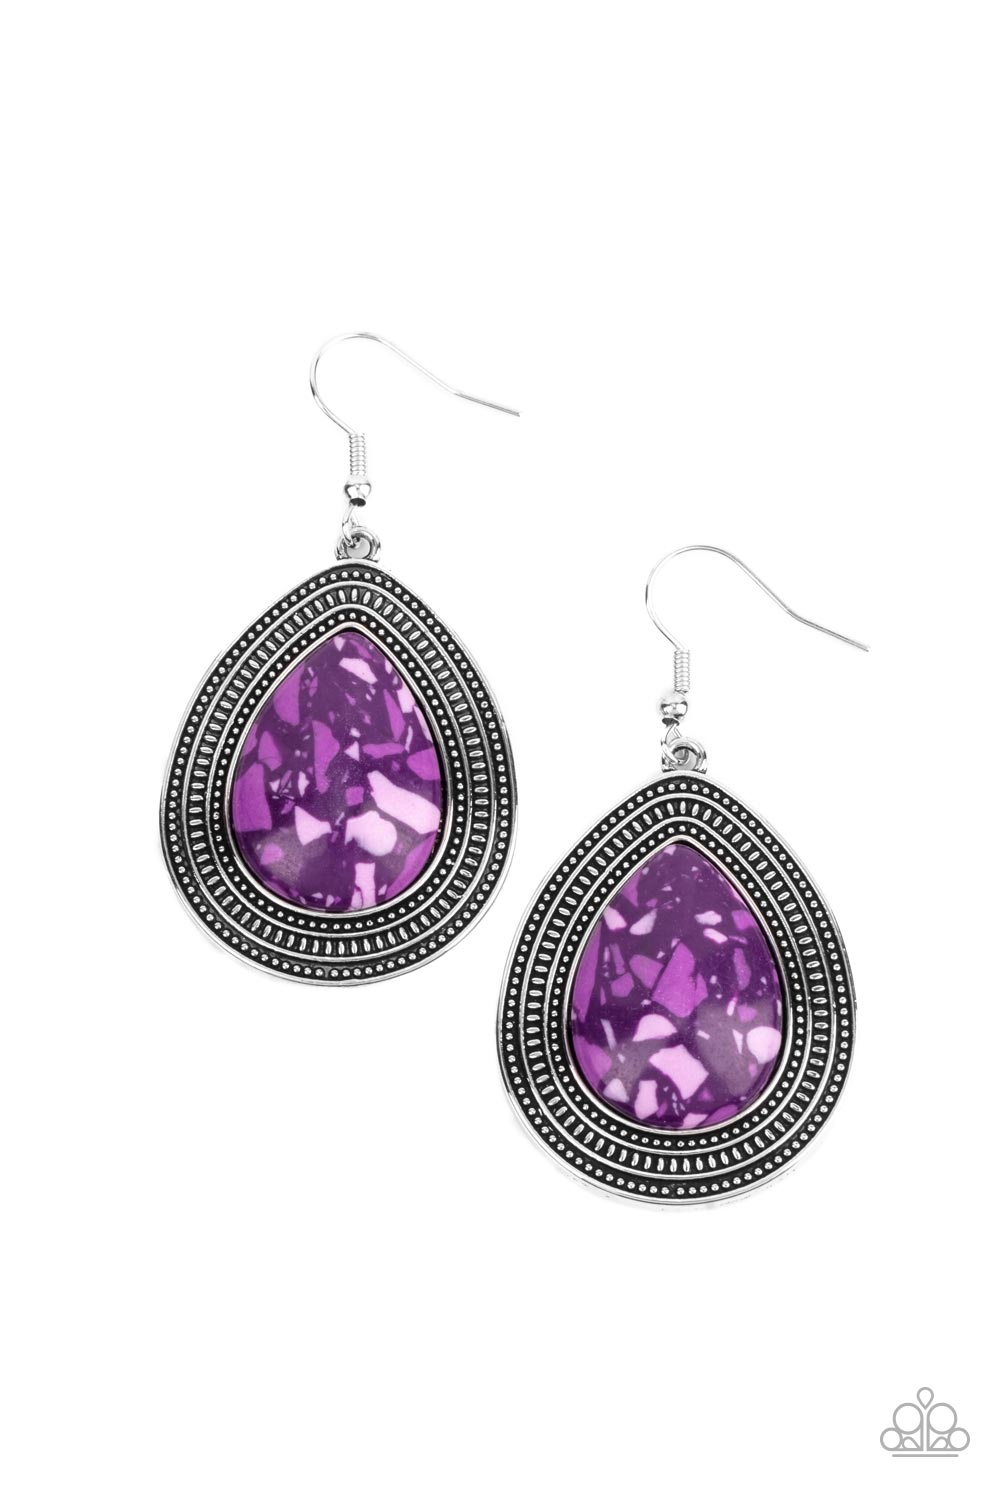 Terrazzo Tundra Purple Stone Earrings - Paparazzi Accessories- lightbox - CarasShop.com - $5 Jewelry by Cara Jewels